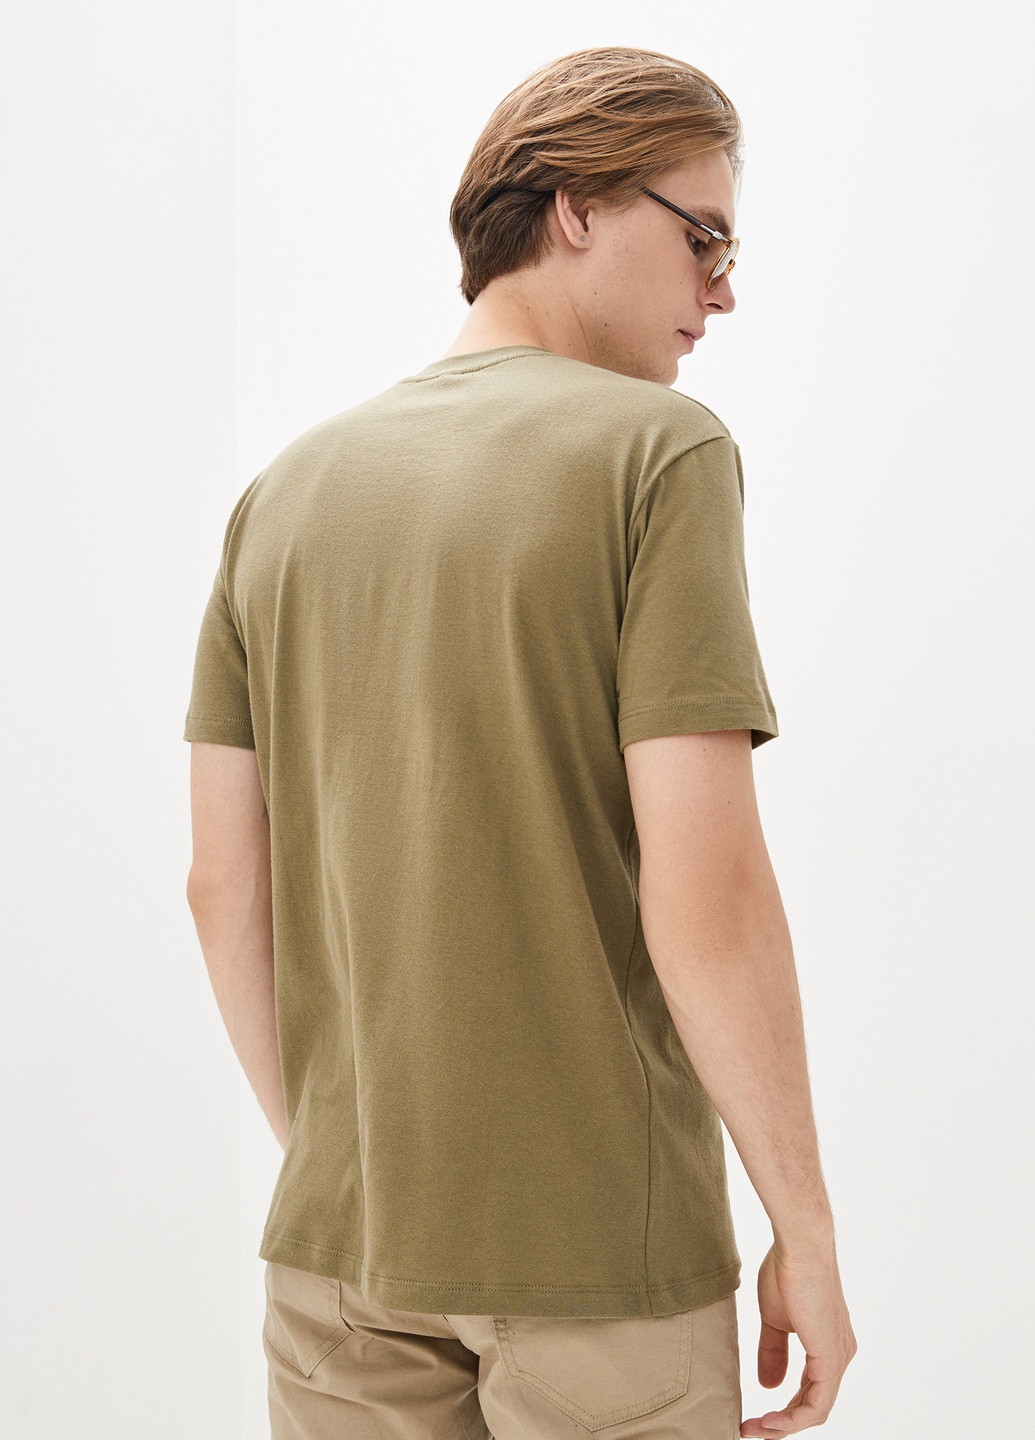 Хаки (оливковая) футболка мужская базовая с коротким рукавом Роза